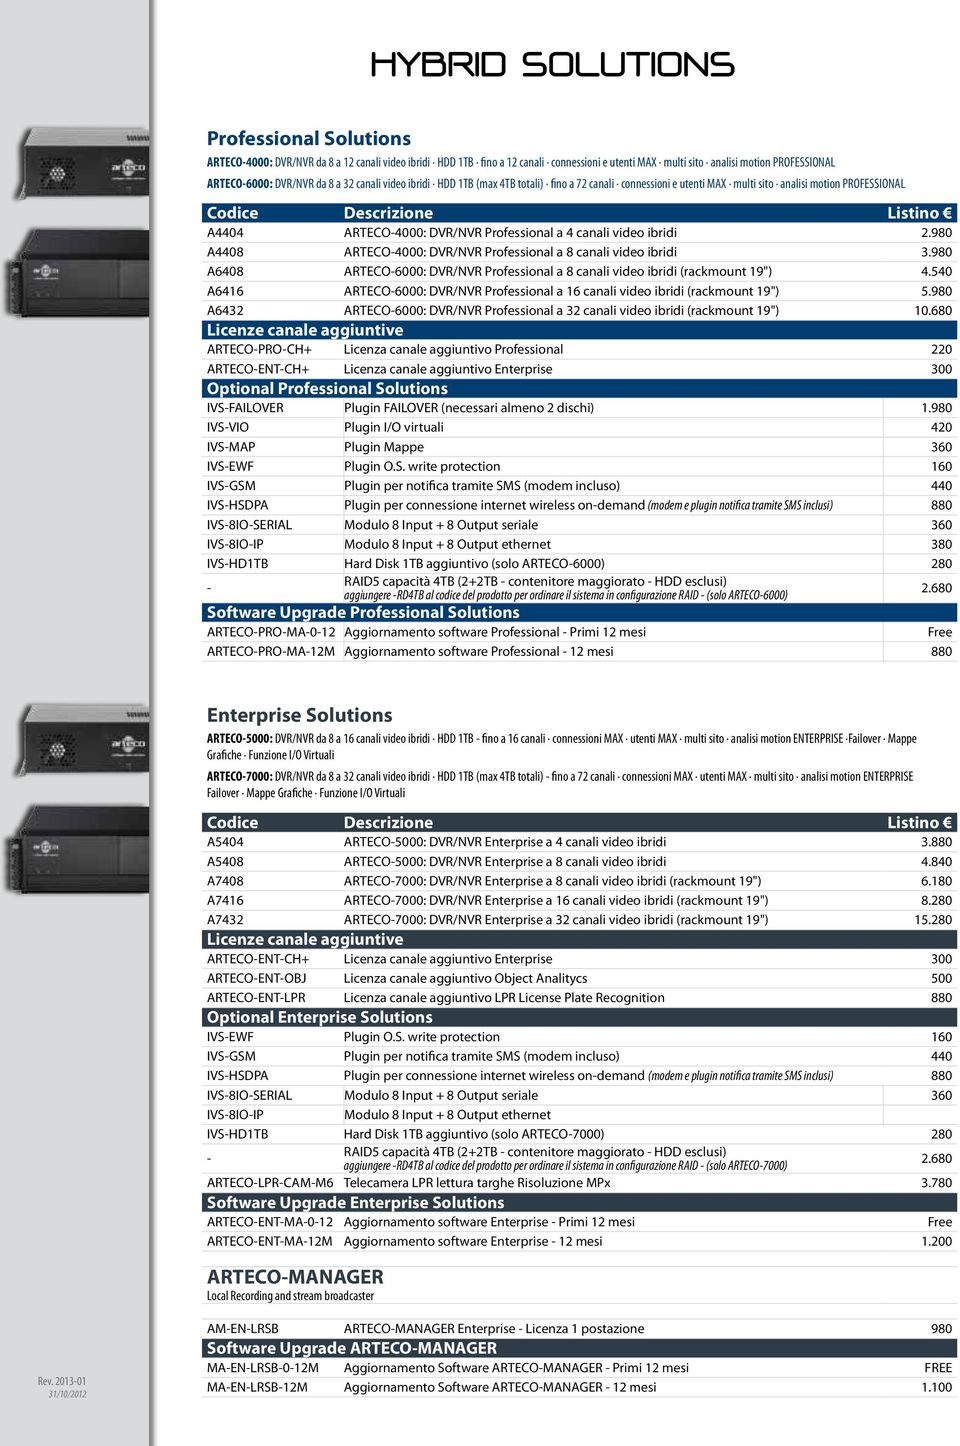 video ibridi 2.980 A4408 ARTECO-4000: DVR/NVR Professional a 8 canali video ibridi 3.980 A6408 ARTECO-6000: DVR/NVR Professional a 8 canali video ibridi (rackmount 19") 4.